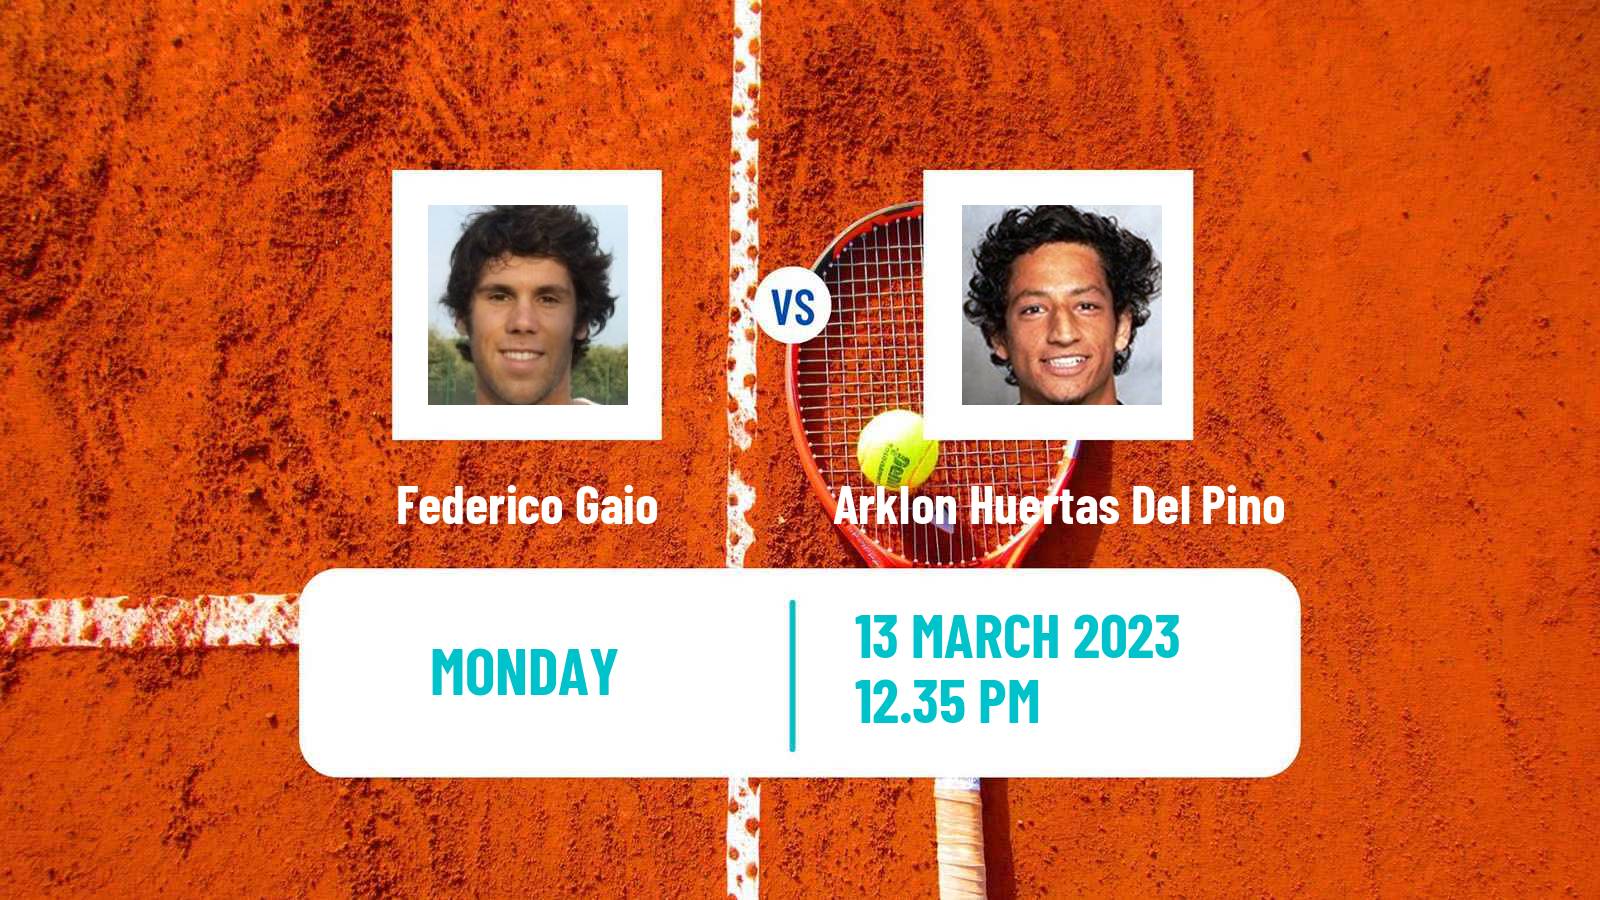 Tennis ATP Challenger Federico Gaio - Arklon Huertas Del Pino